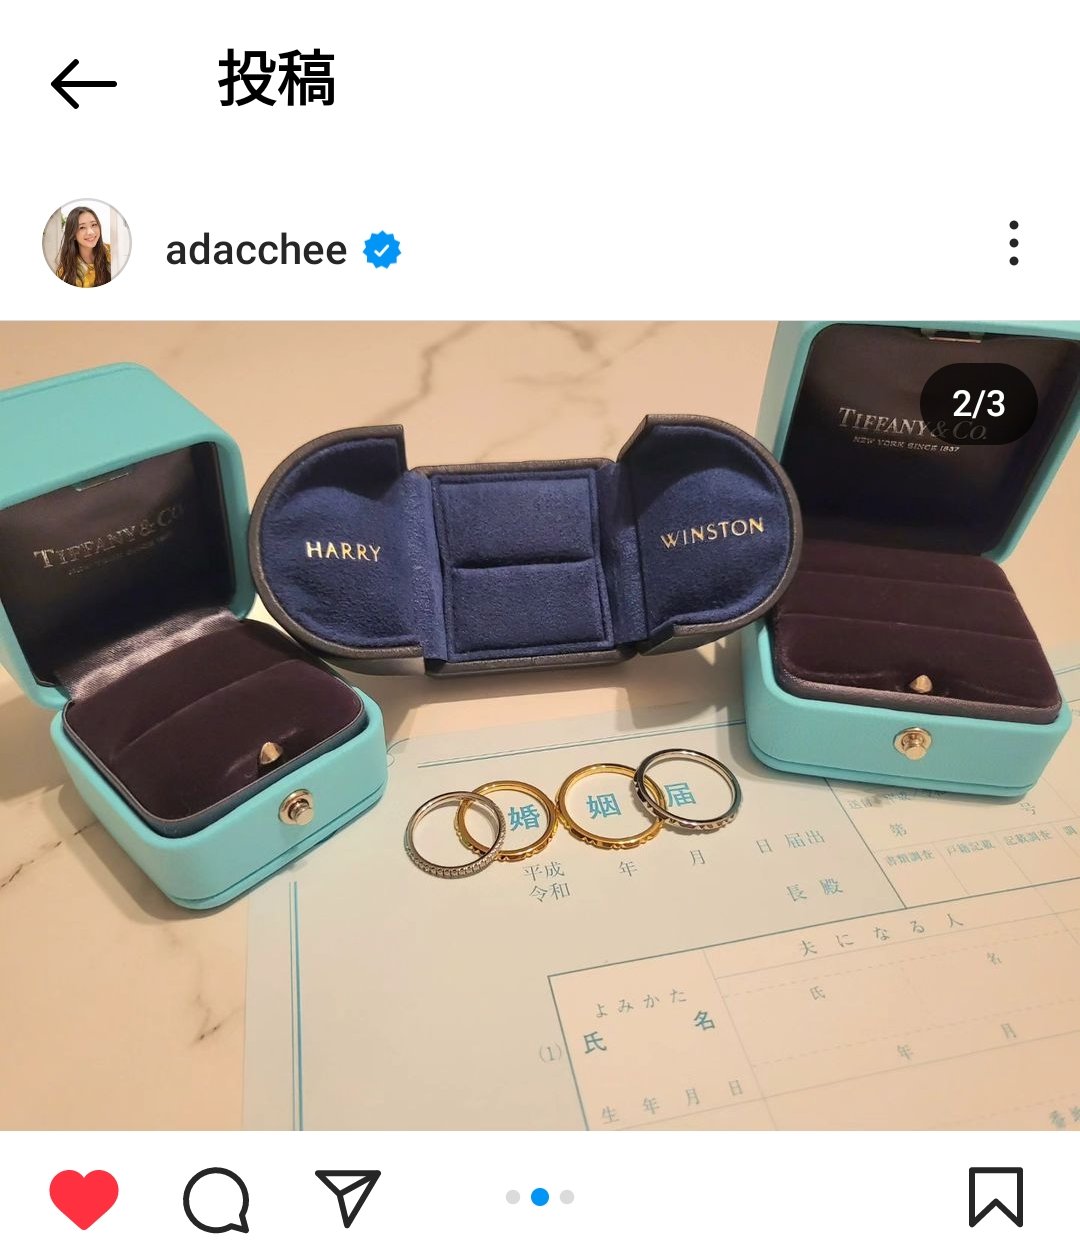 TATSUが贈った婚約指輪の値段は？